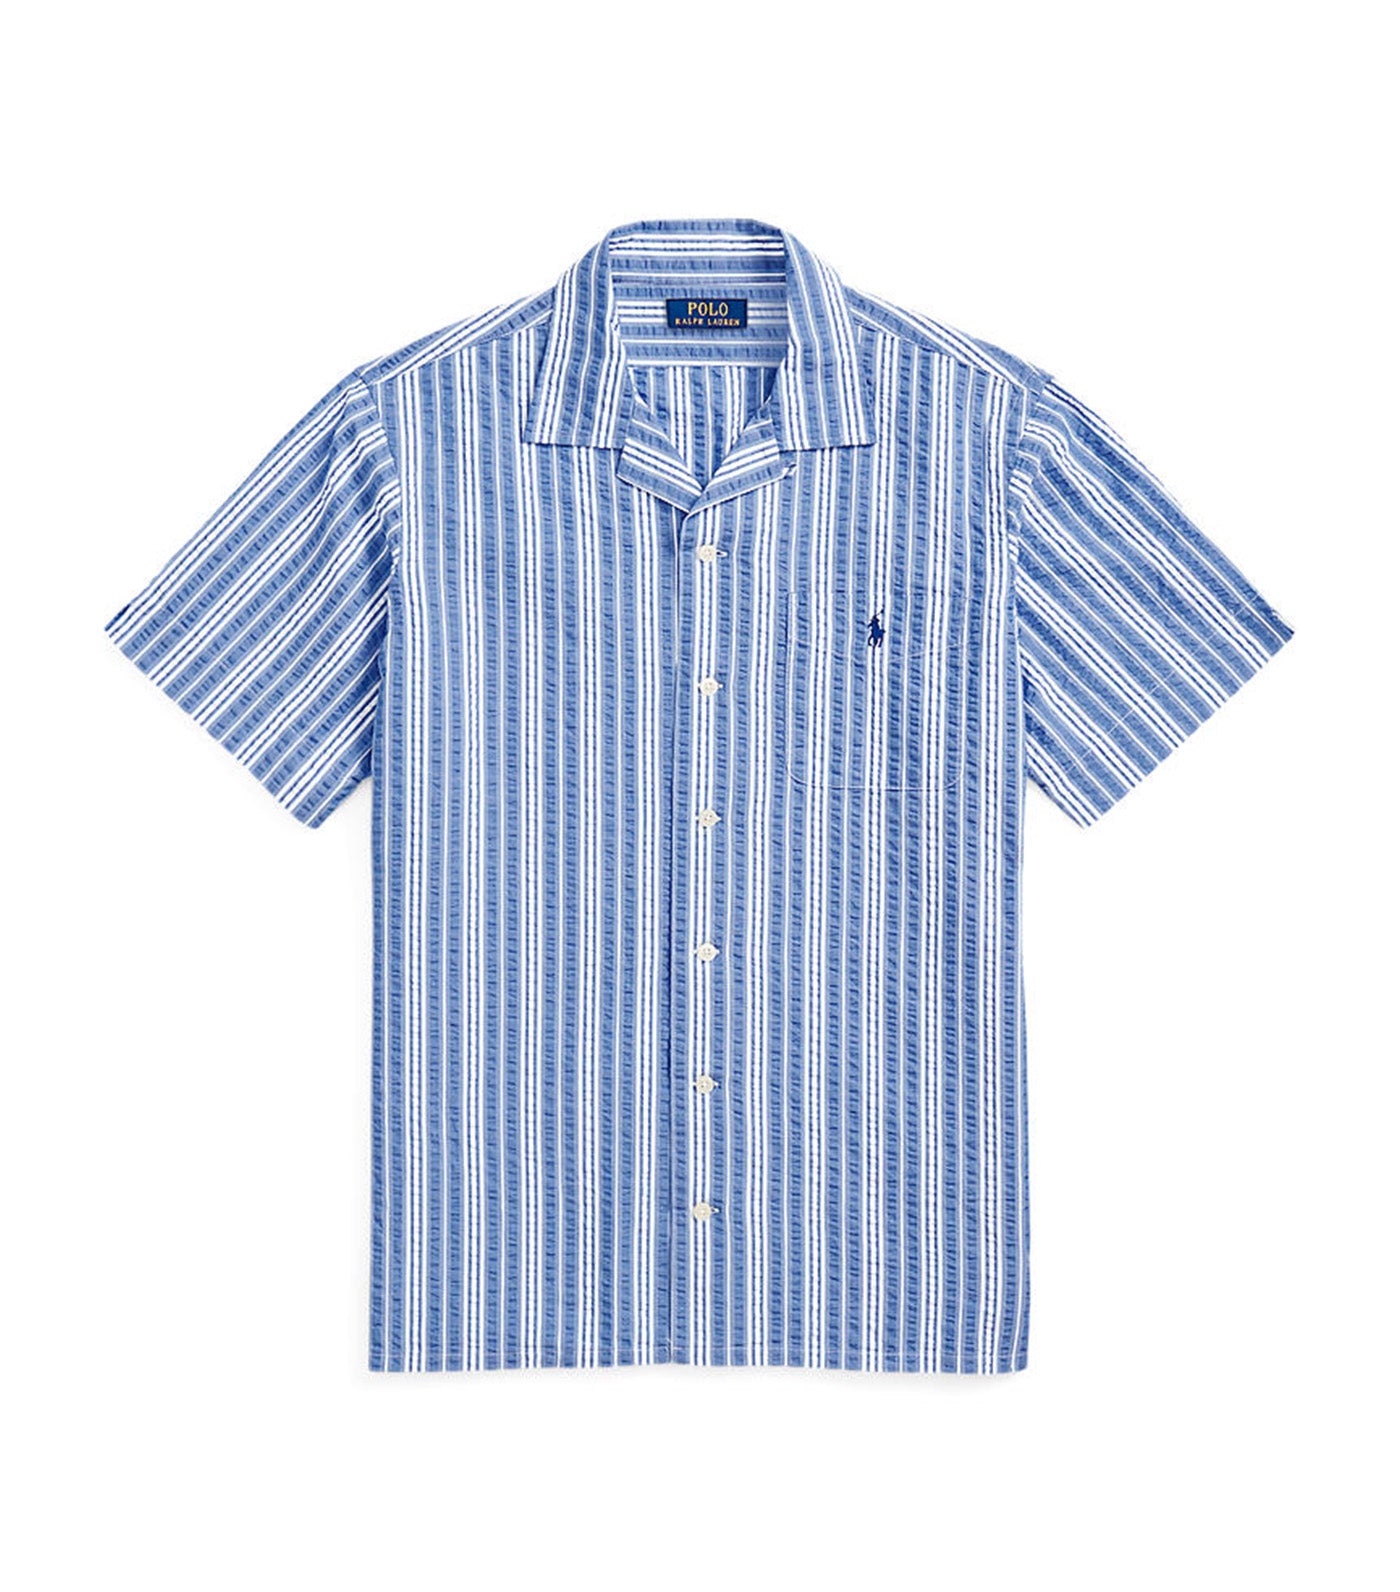 Men's Classic Fit Striped Seersucker Shirt Blue/White